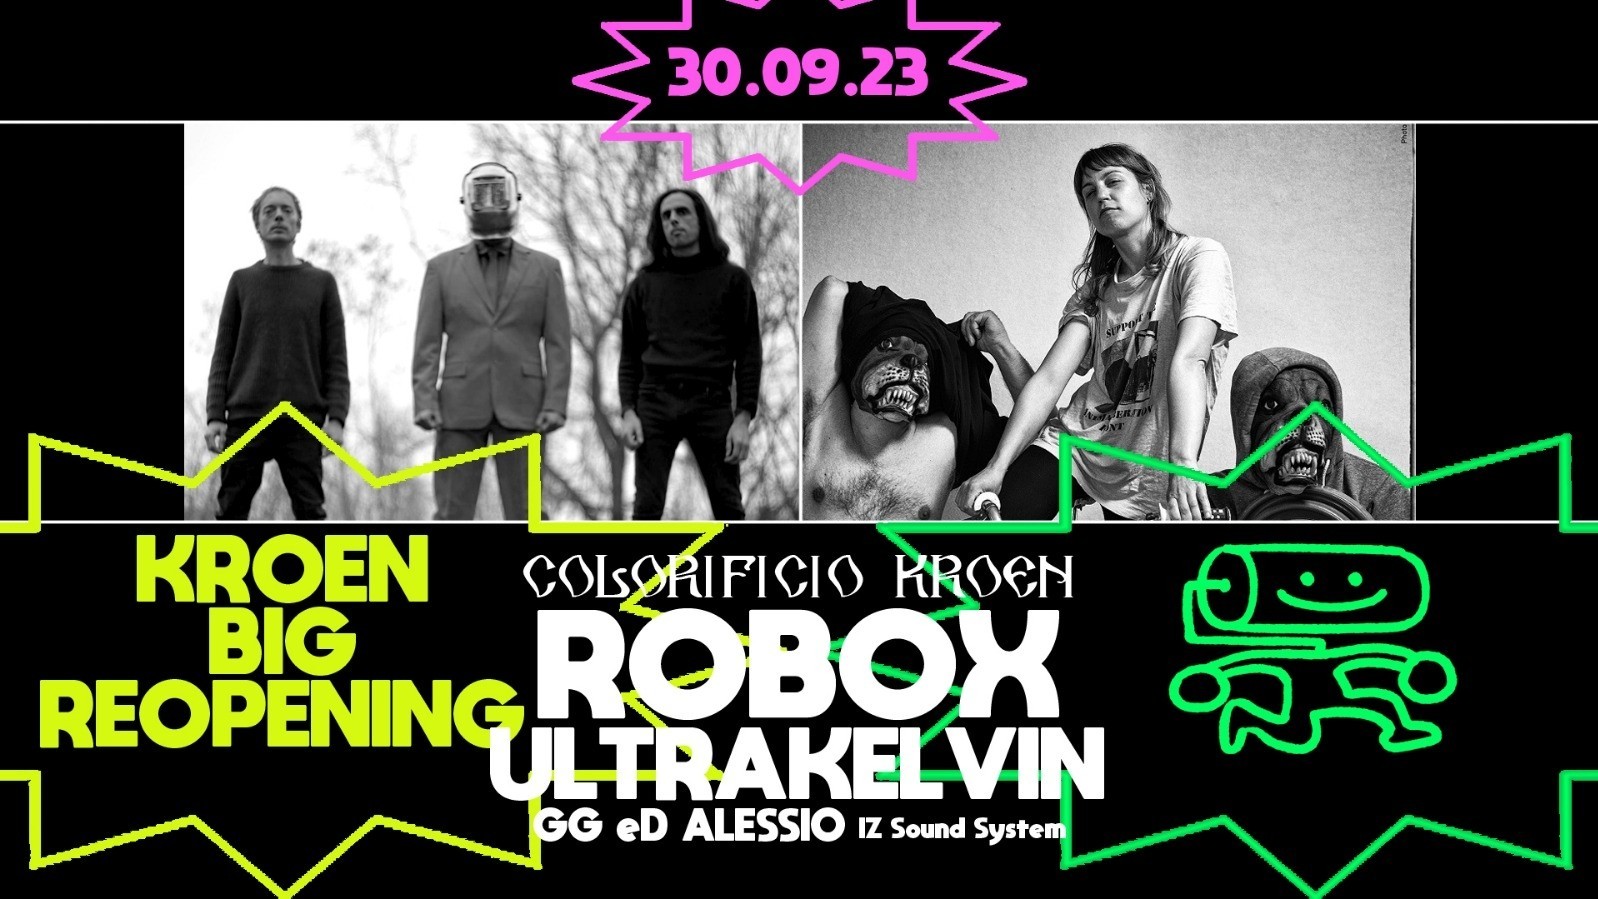 Kroen Big Reopening Season con Robox (It) + Ultrakelvin (It) + Gg eD Alessio (Iz Sound System)